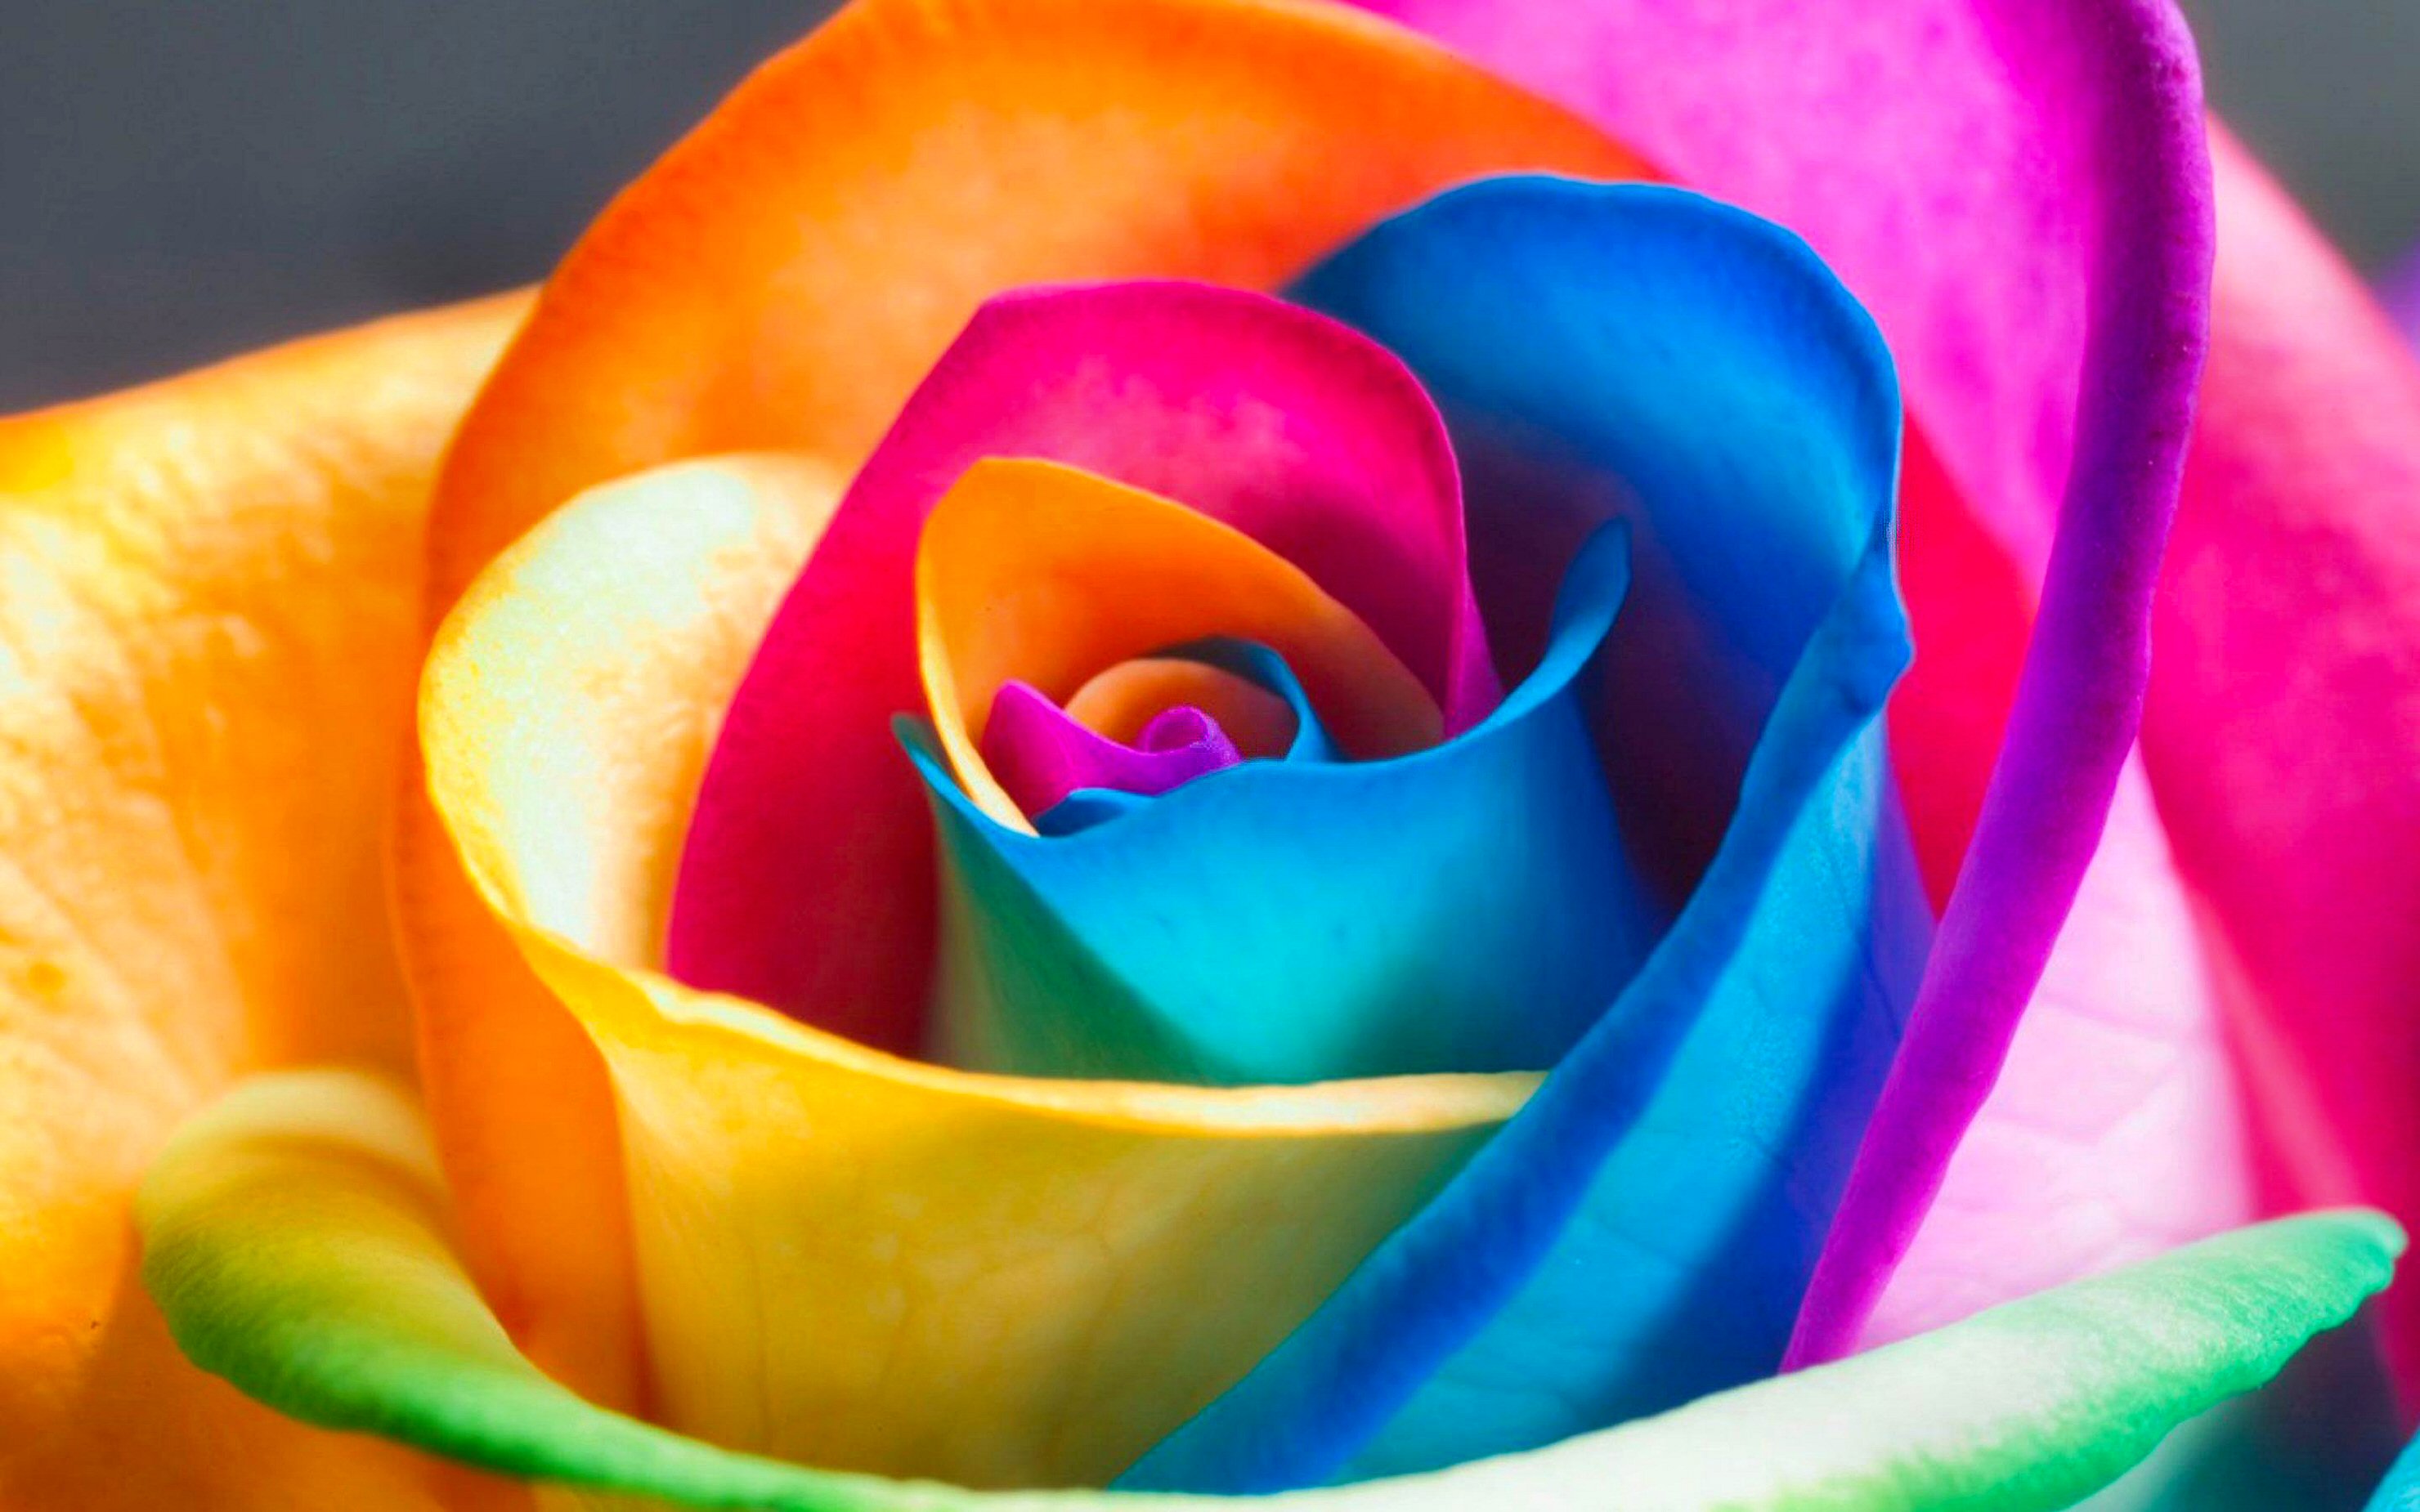 HD desktop wallpaper: Flowers, Flower, Rose, Earth, Colorful, Petal  download free picture #278251